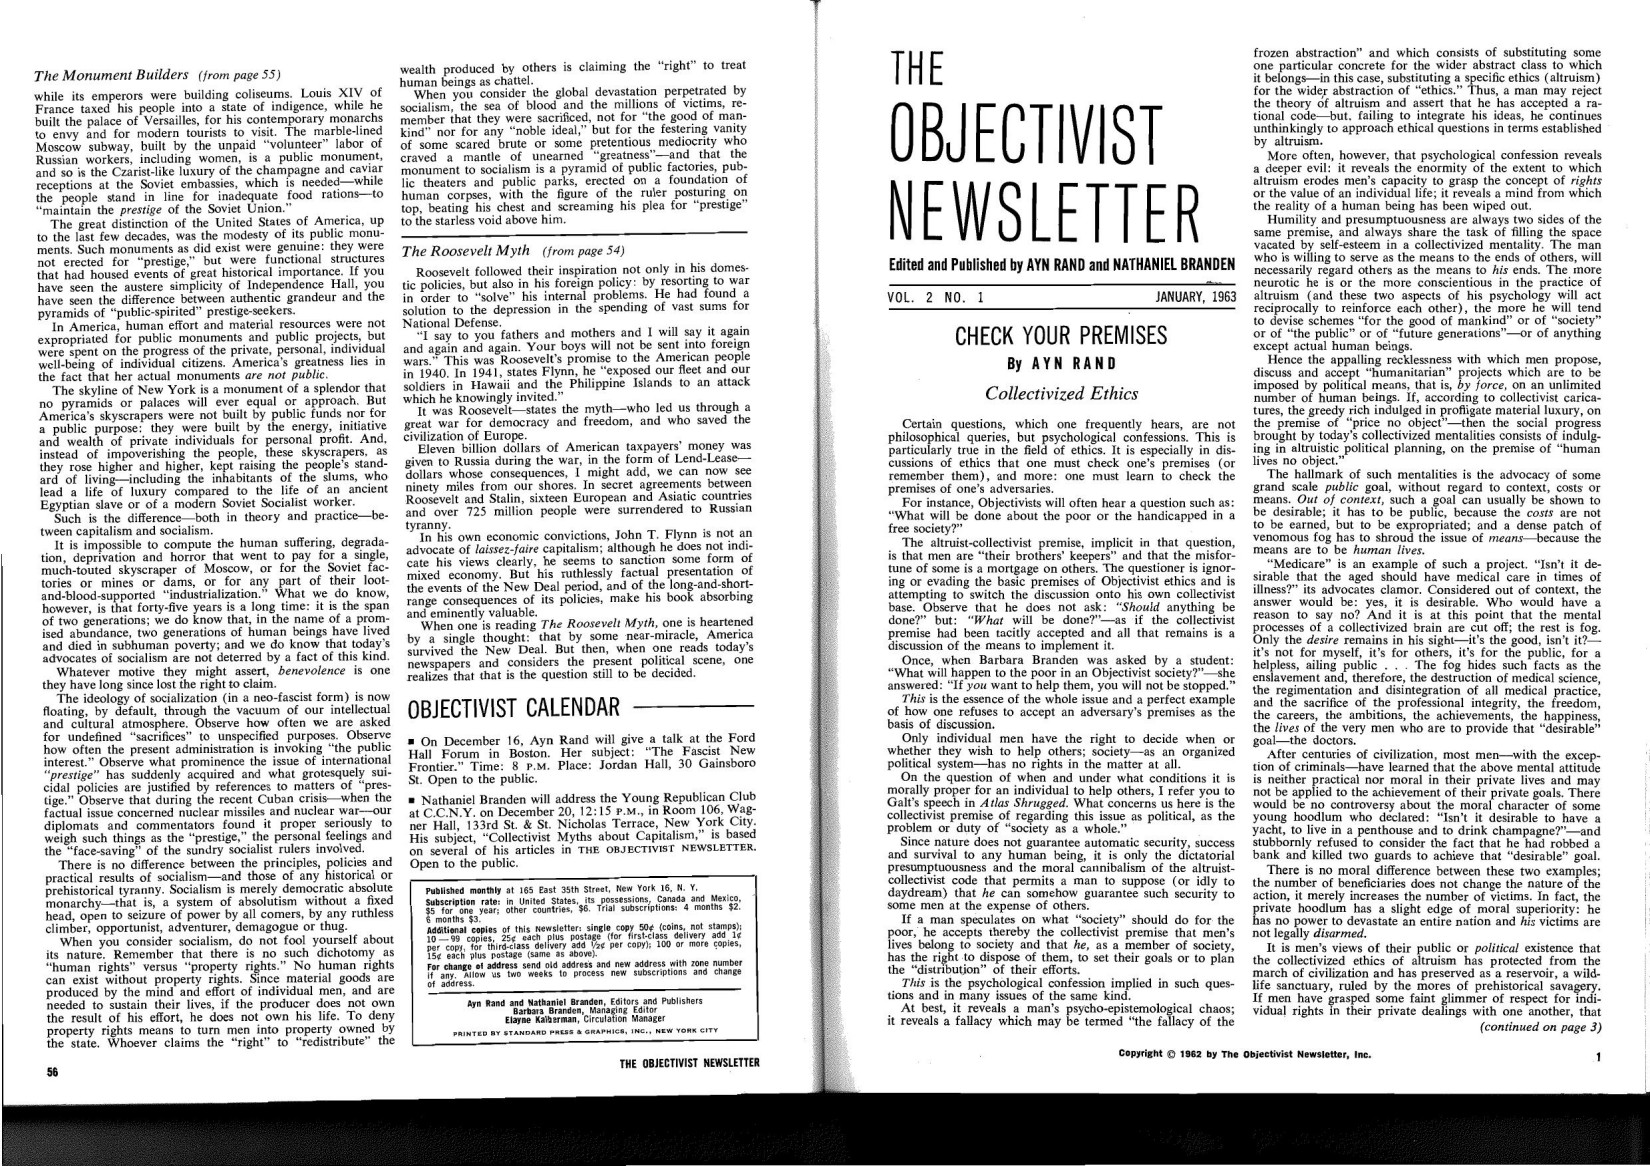 Objectivist Newsletter, Volume 2, 1963